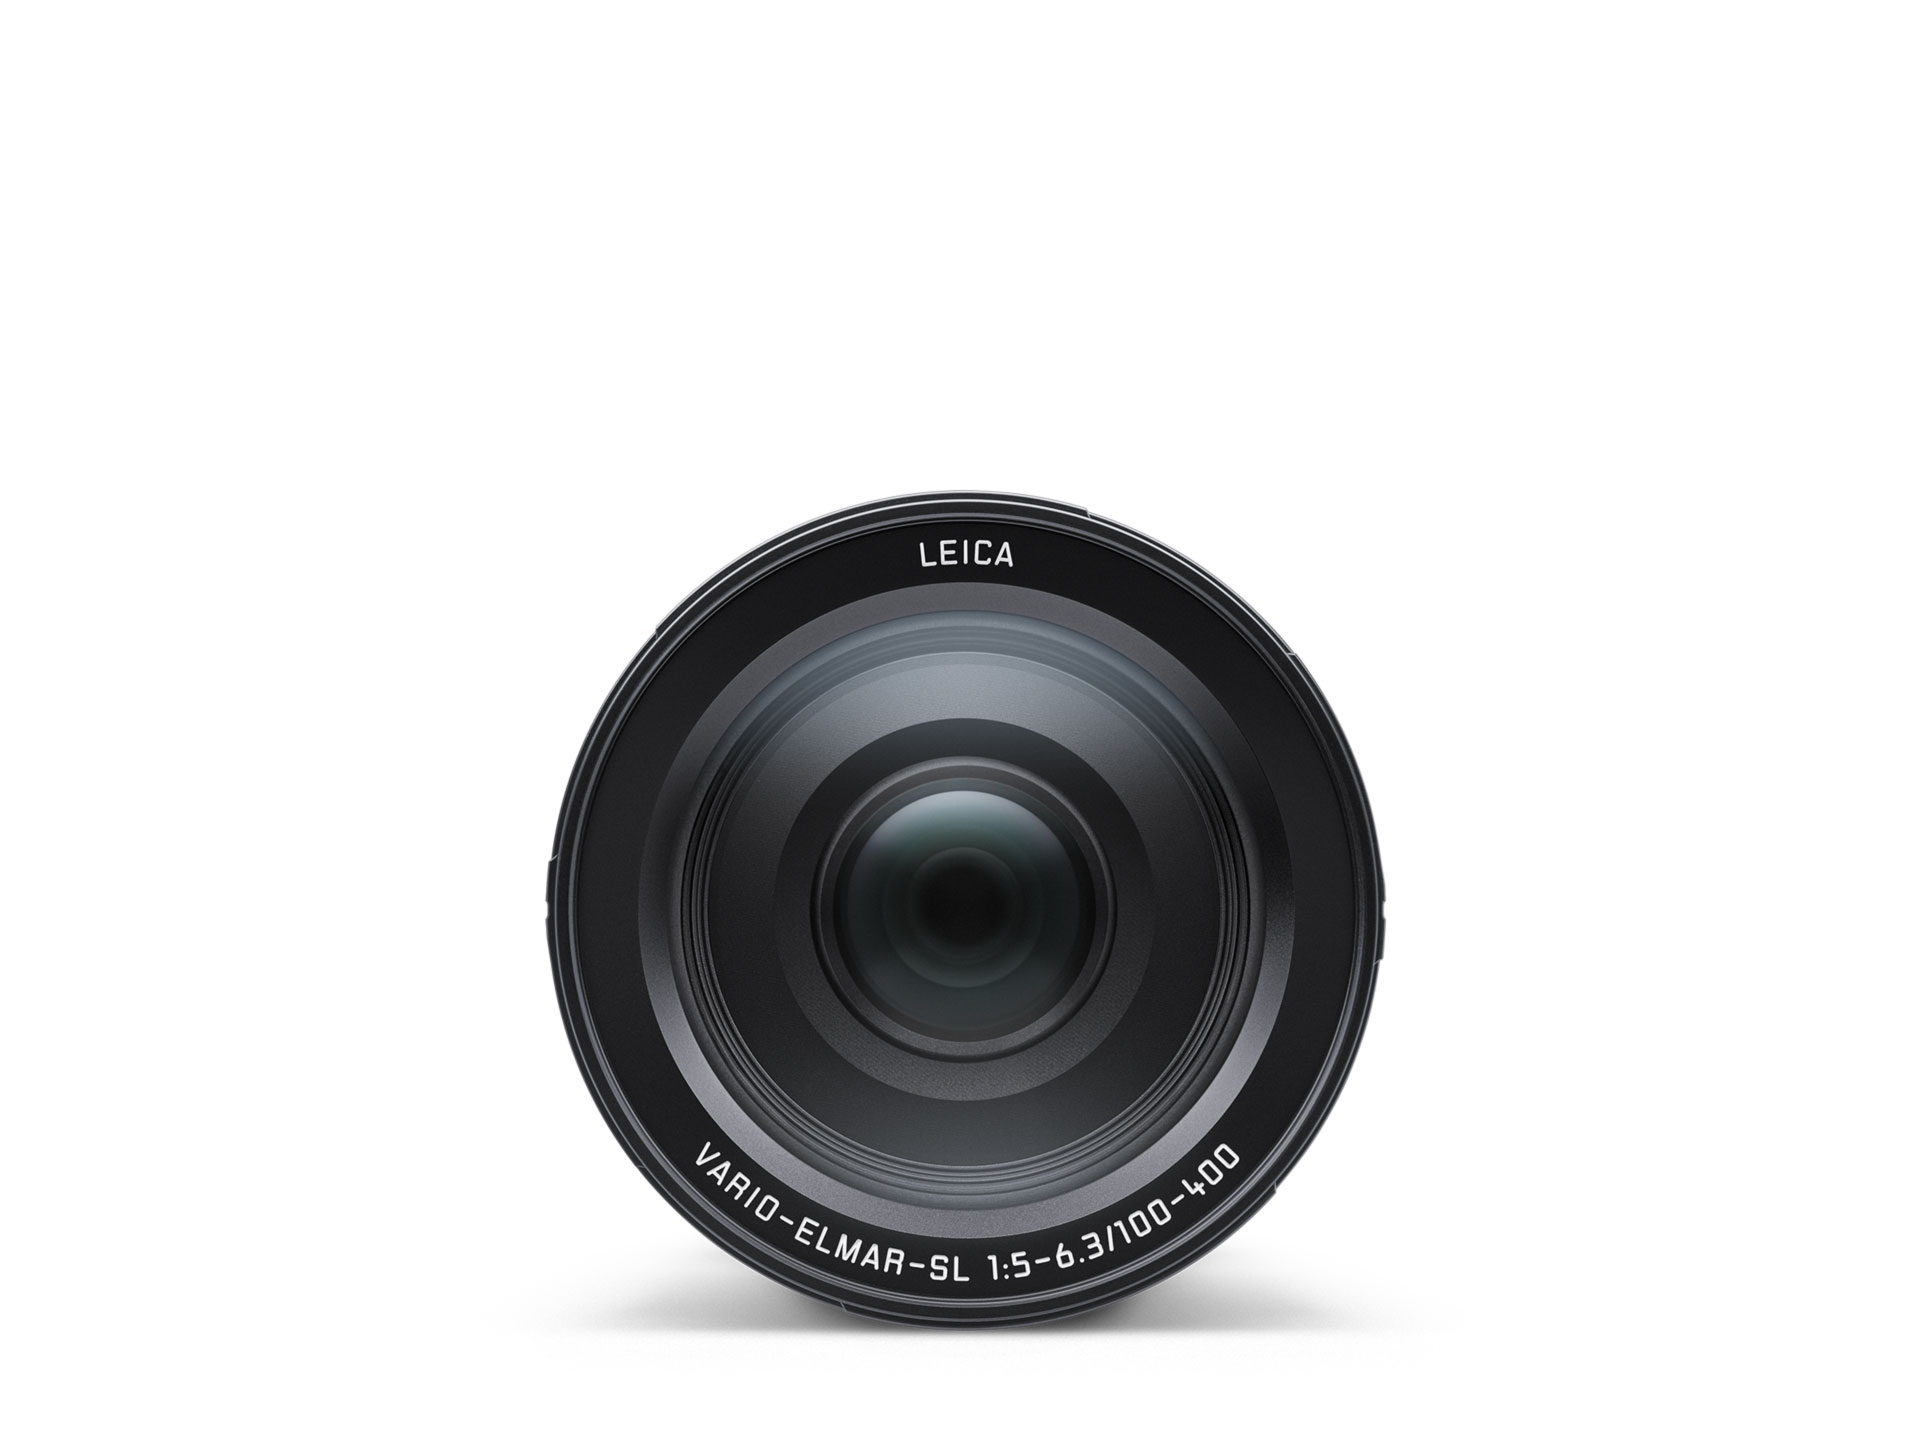 Leica Vario-Elmar-SL 100-400 f/5-6.3